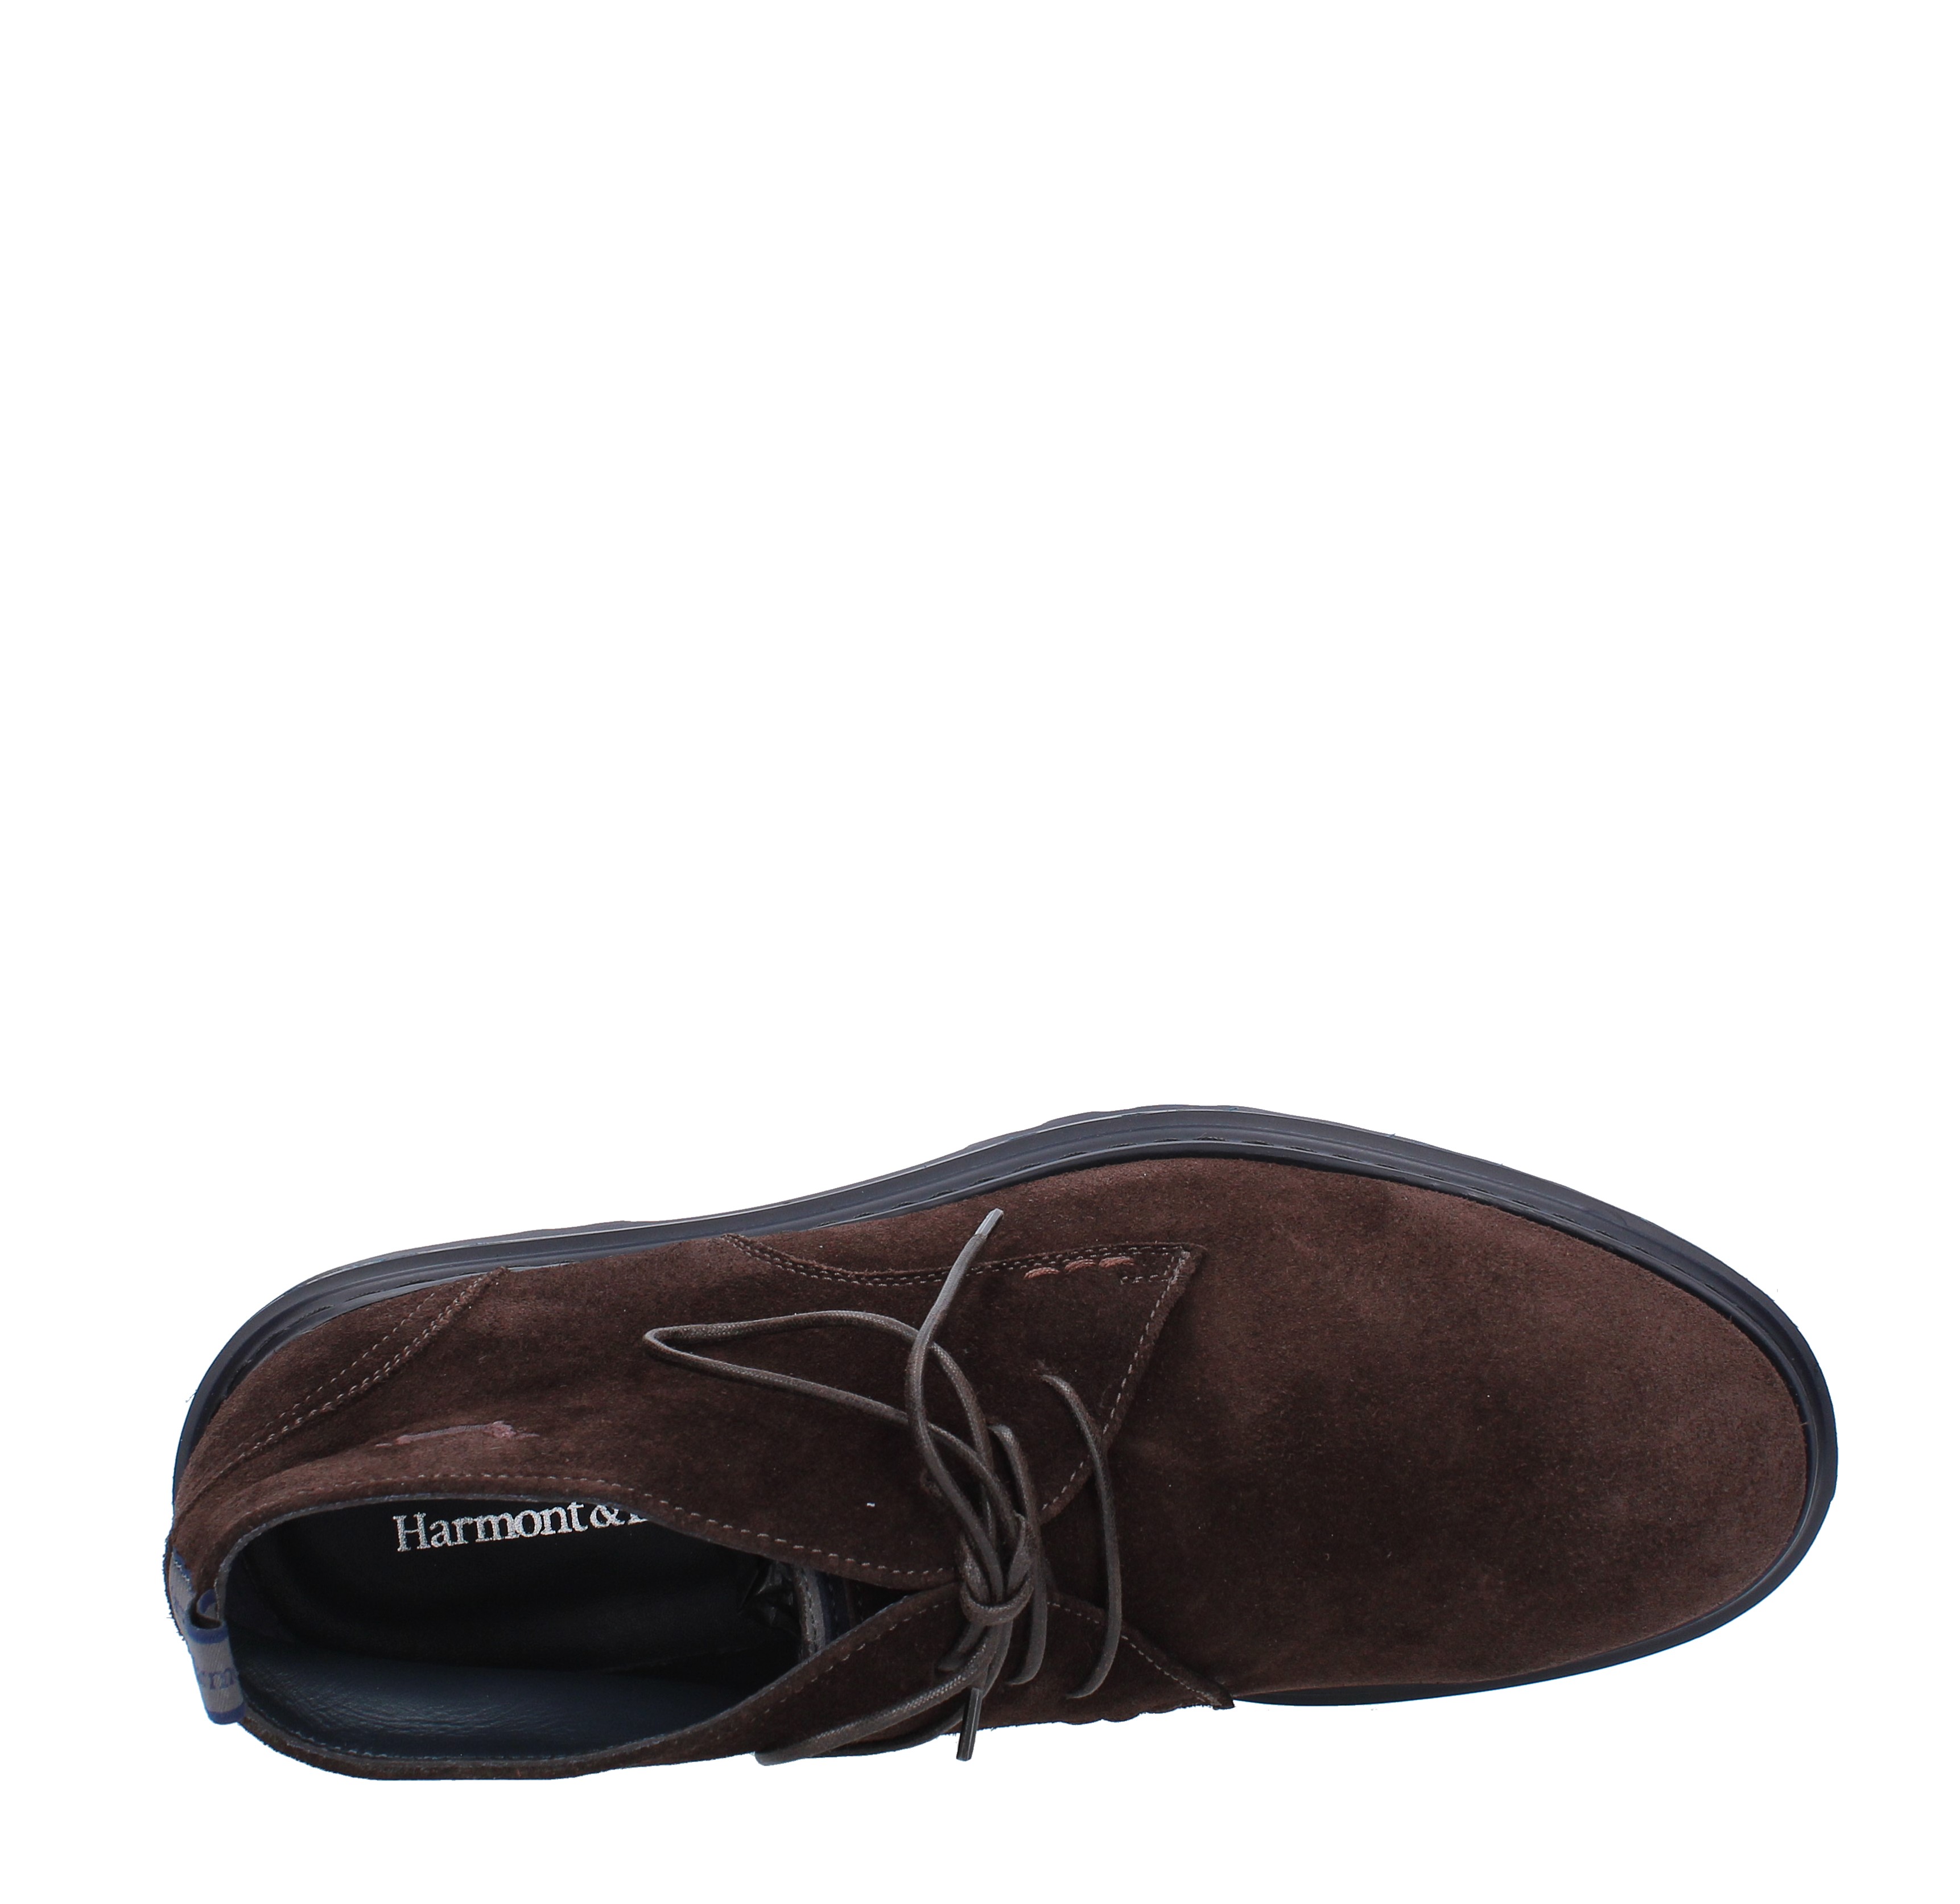 Polacchine in camoscio - HARMONT & BLAINE - Ginevra calzature